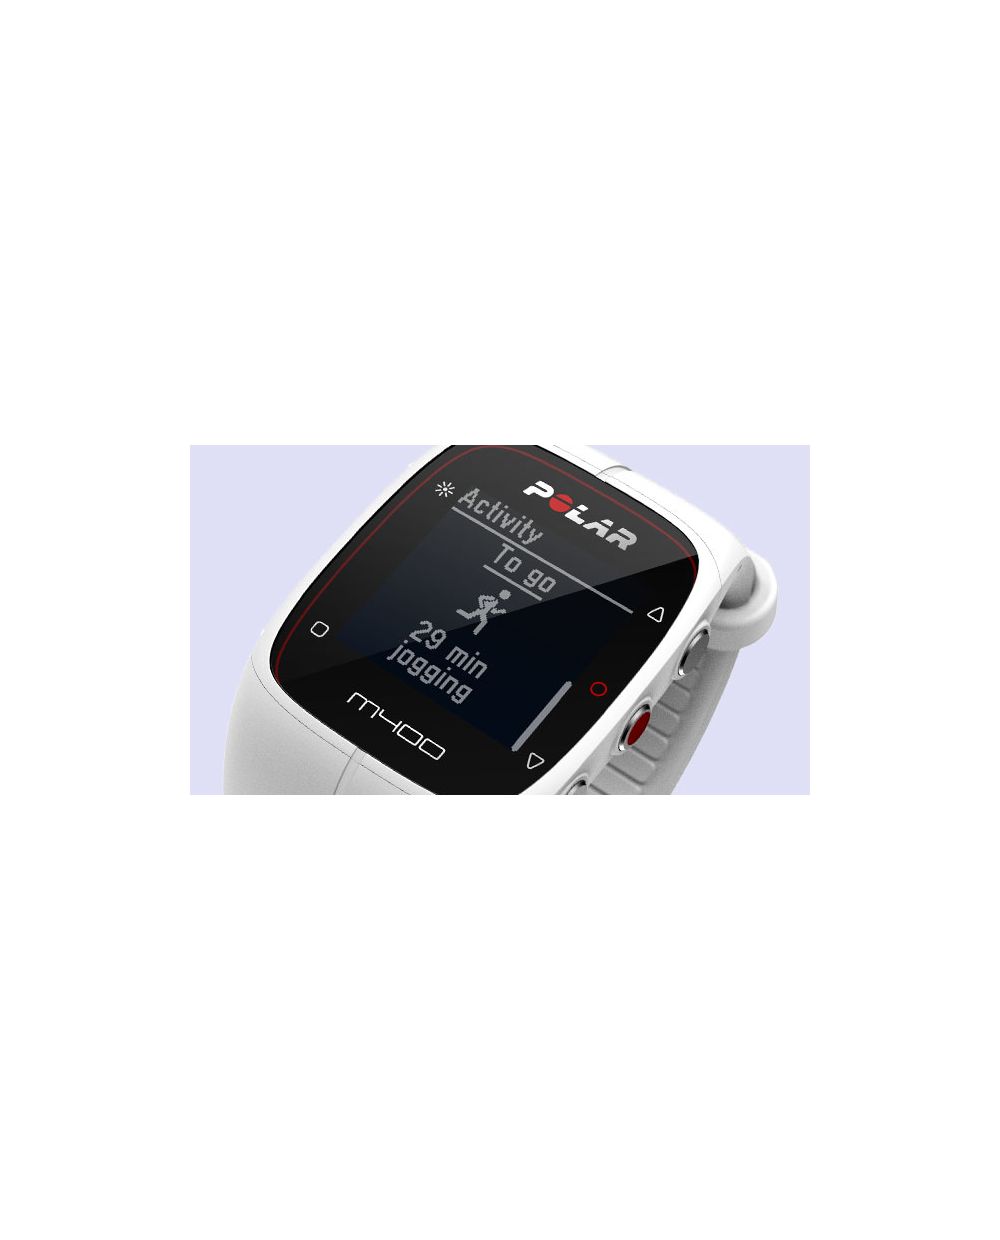 Polar M400 GPS Watch